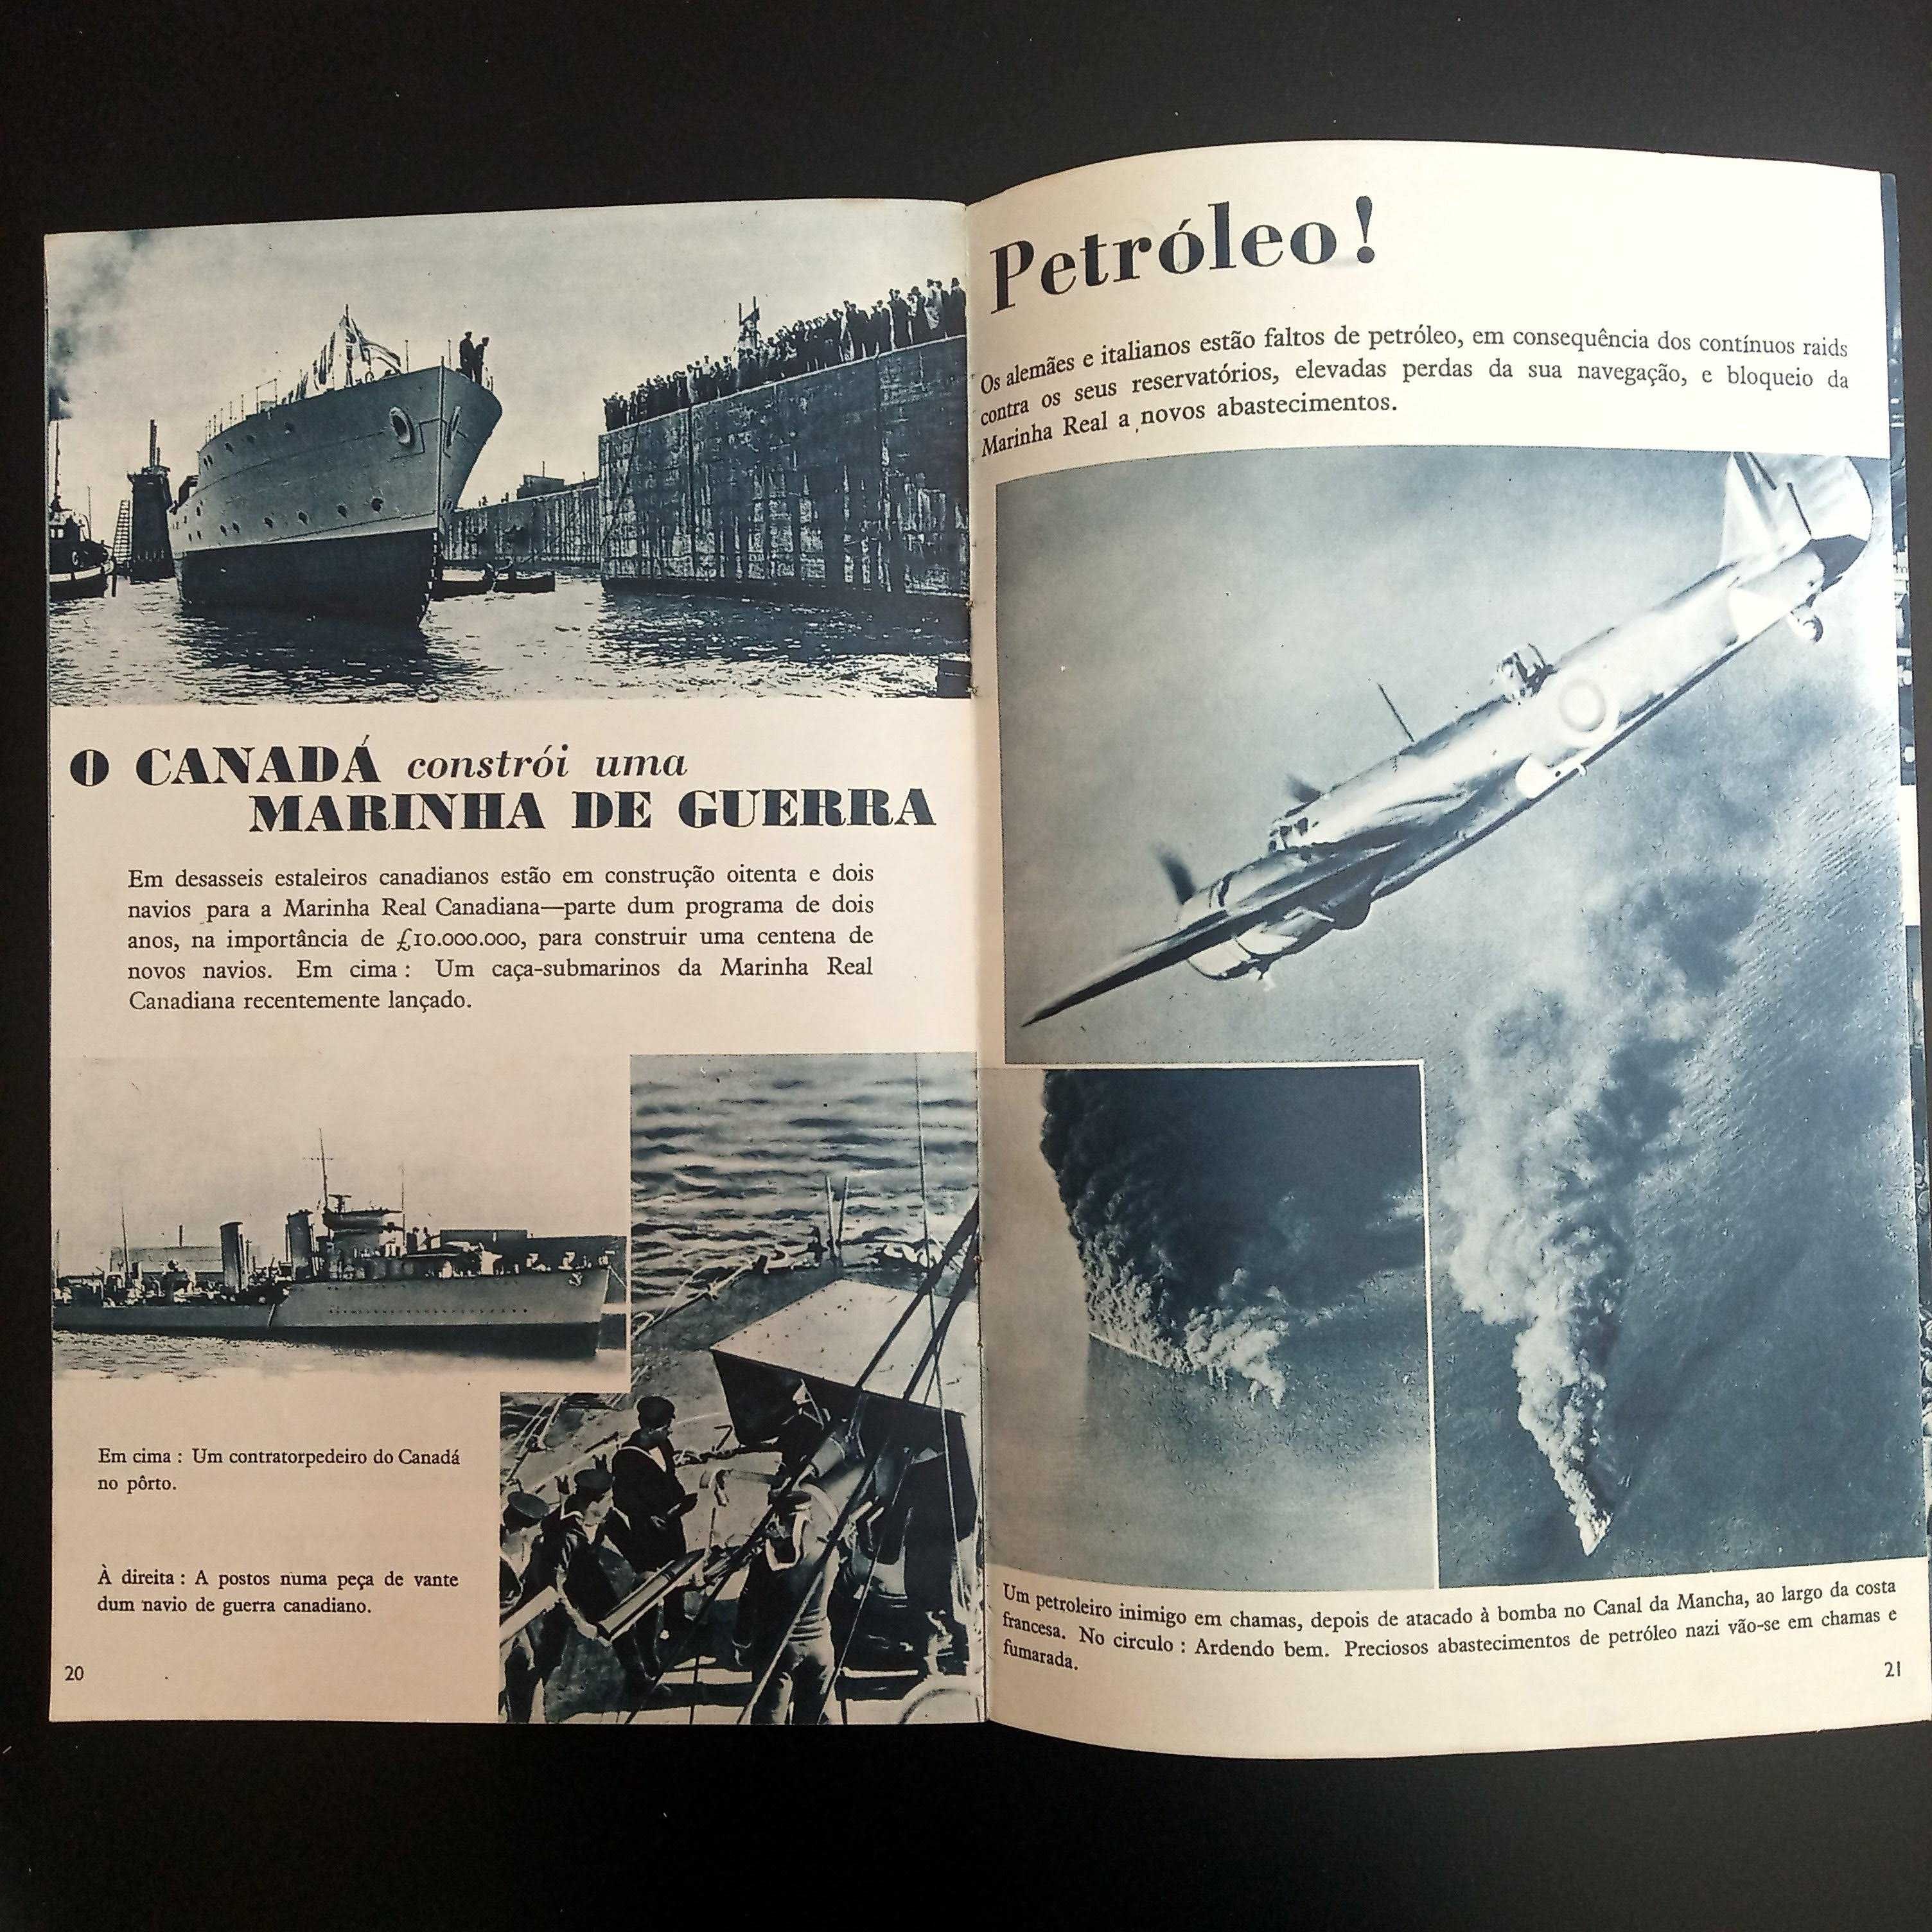 Neptuno nº6 - 1940 Revista de propaganda aliada